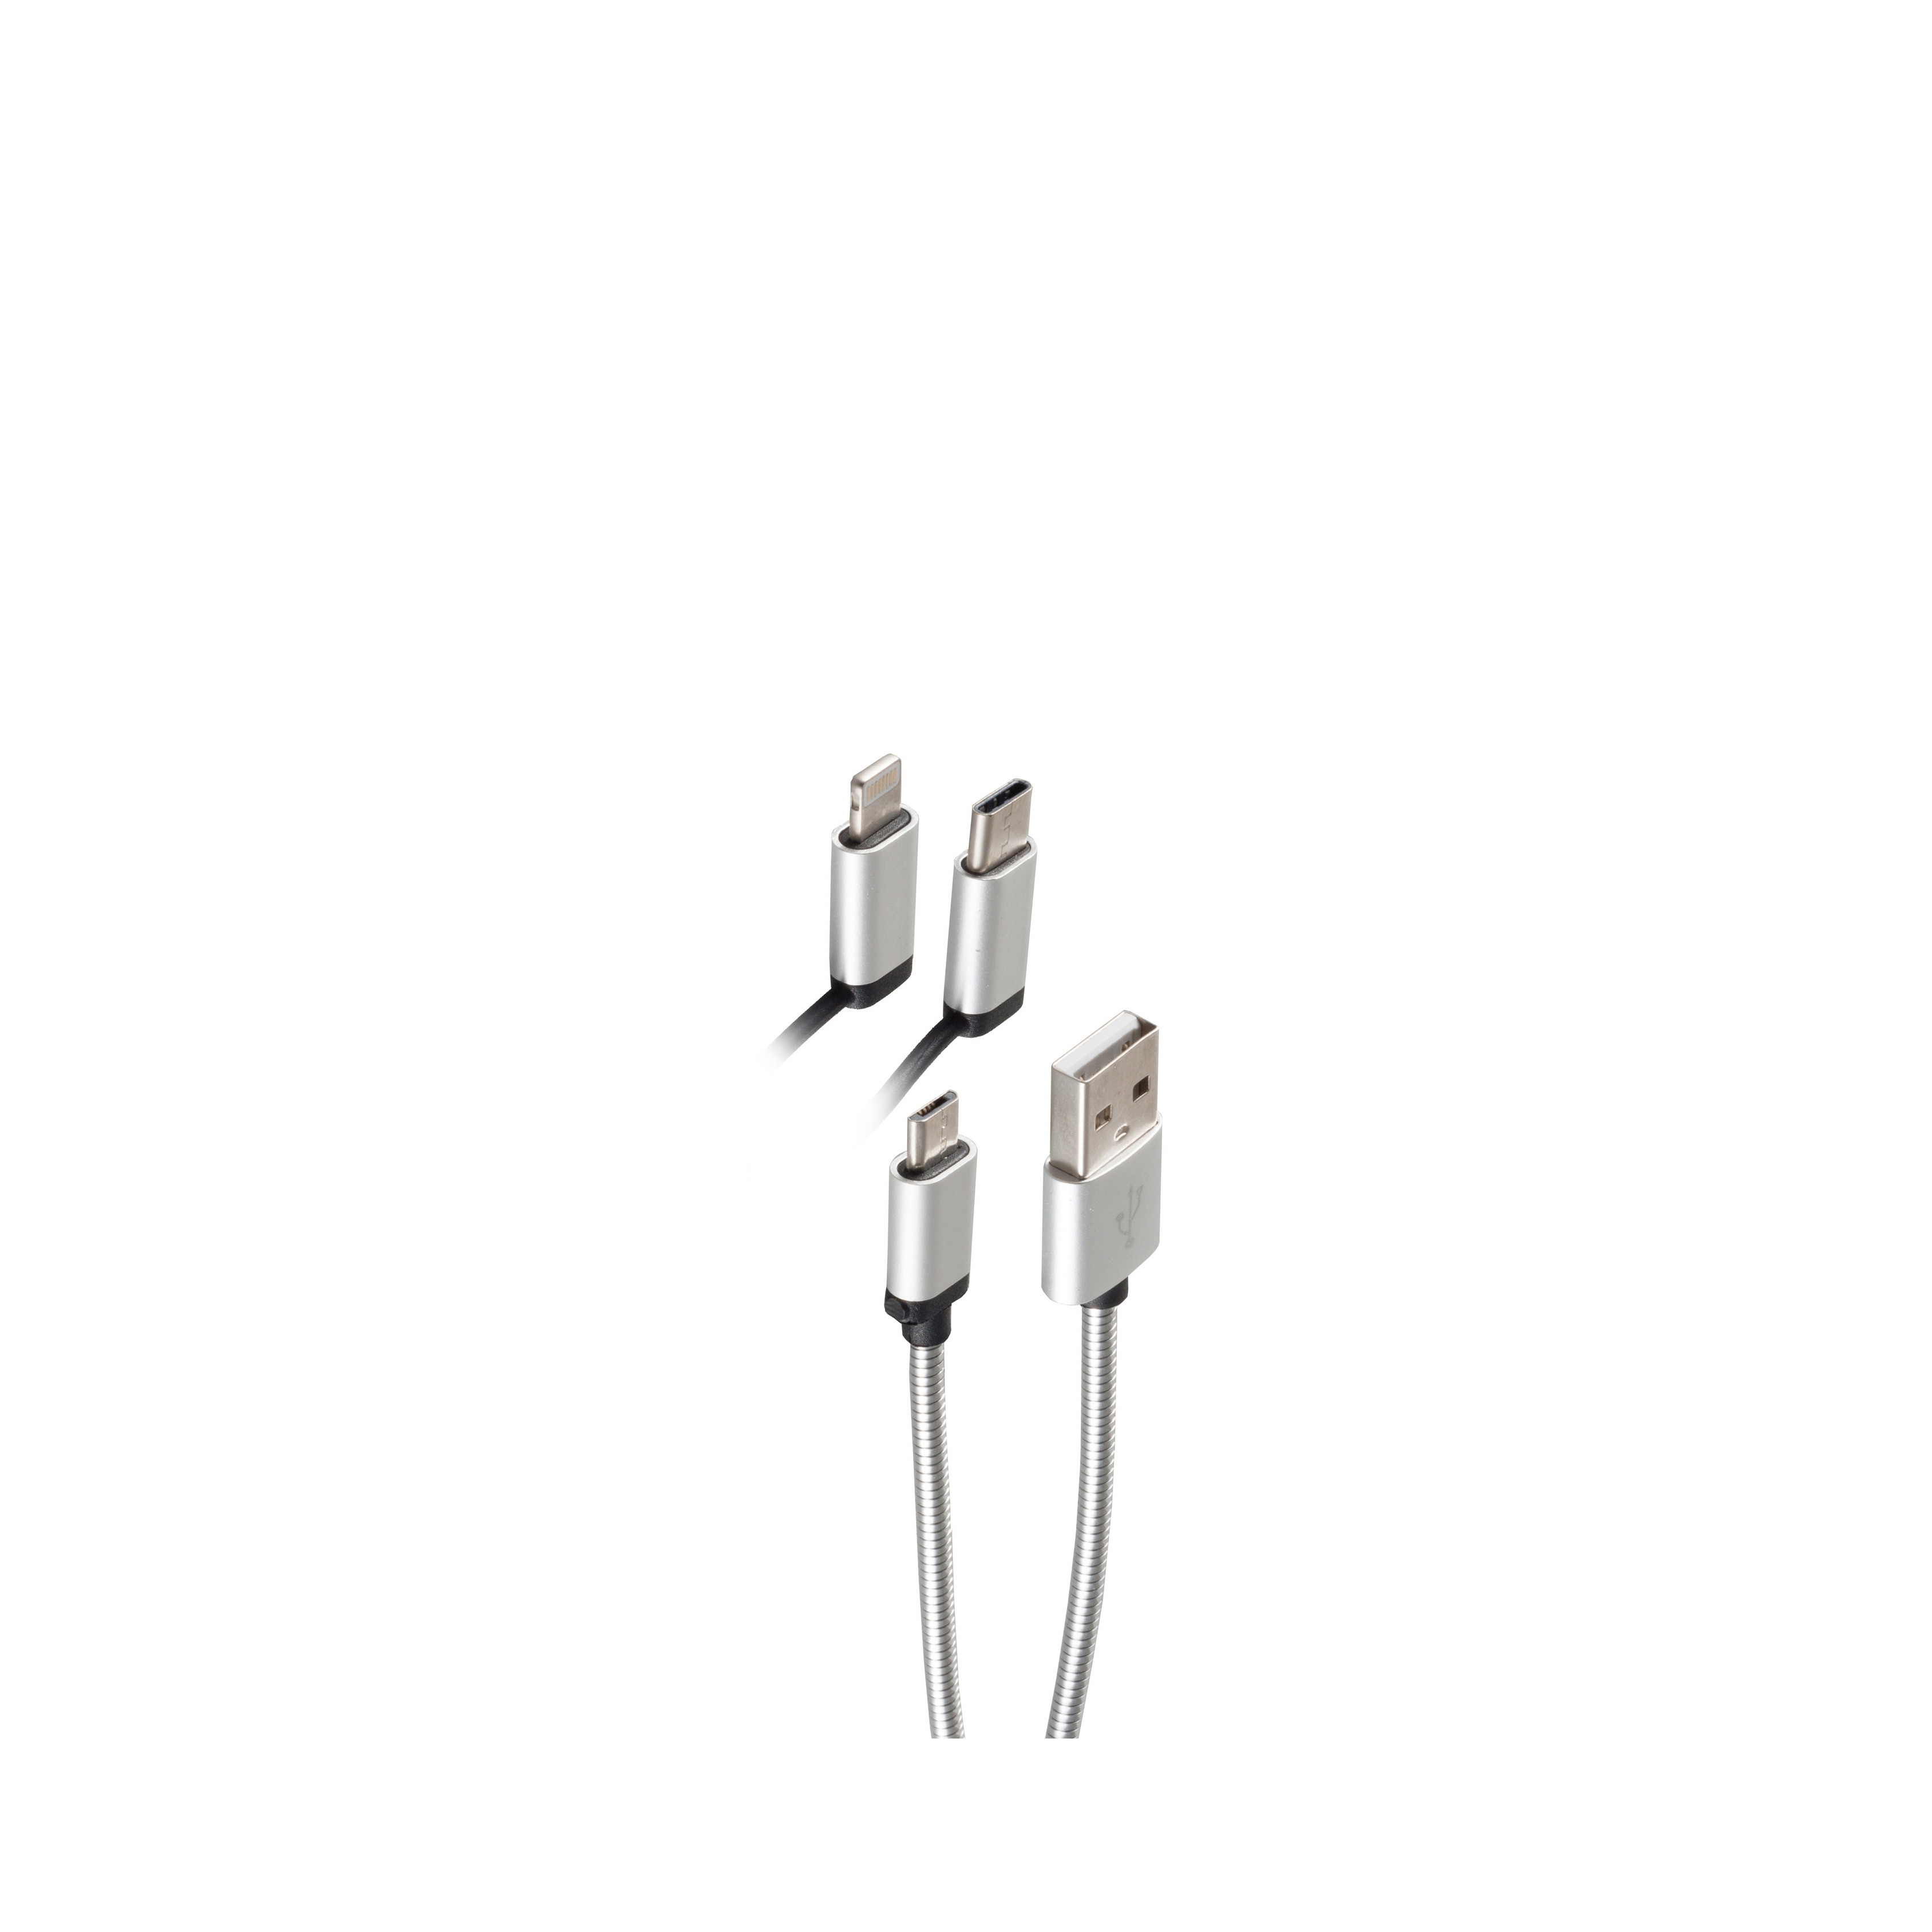 8-pin Ladekabel Micro USB SHIVERPEAKS m, 1m, Stecker silber 1 3in1 B/C/ silber Ladekabel,